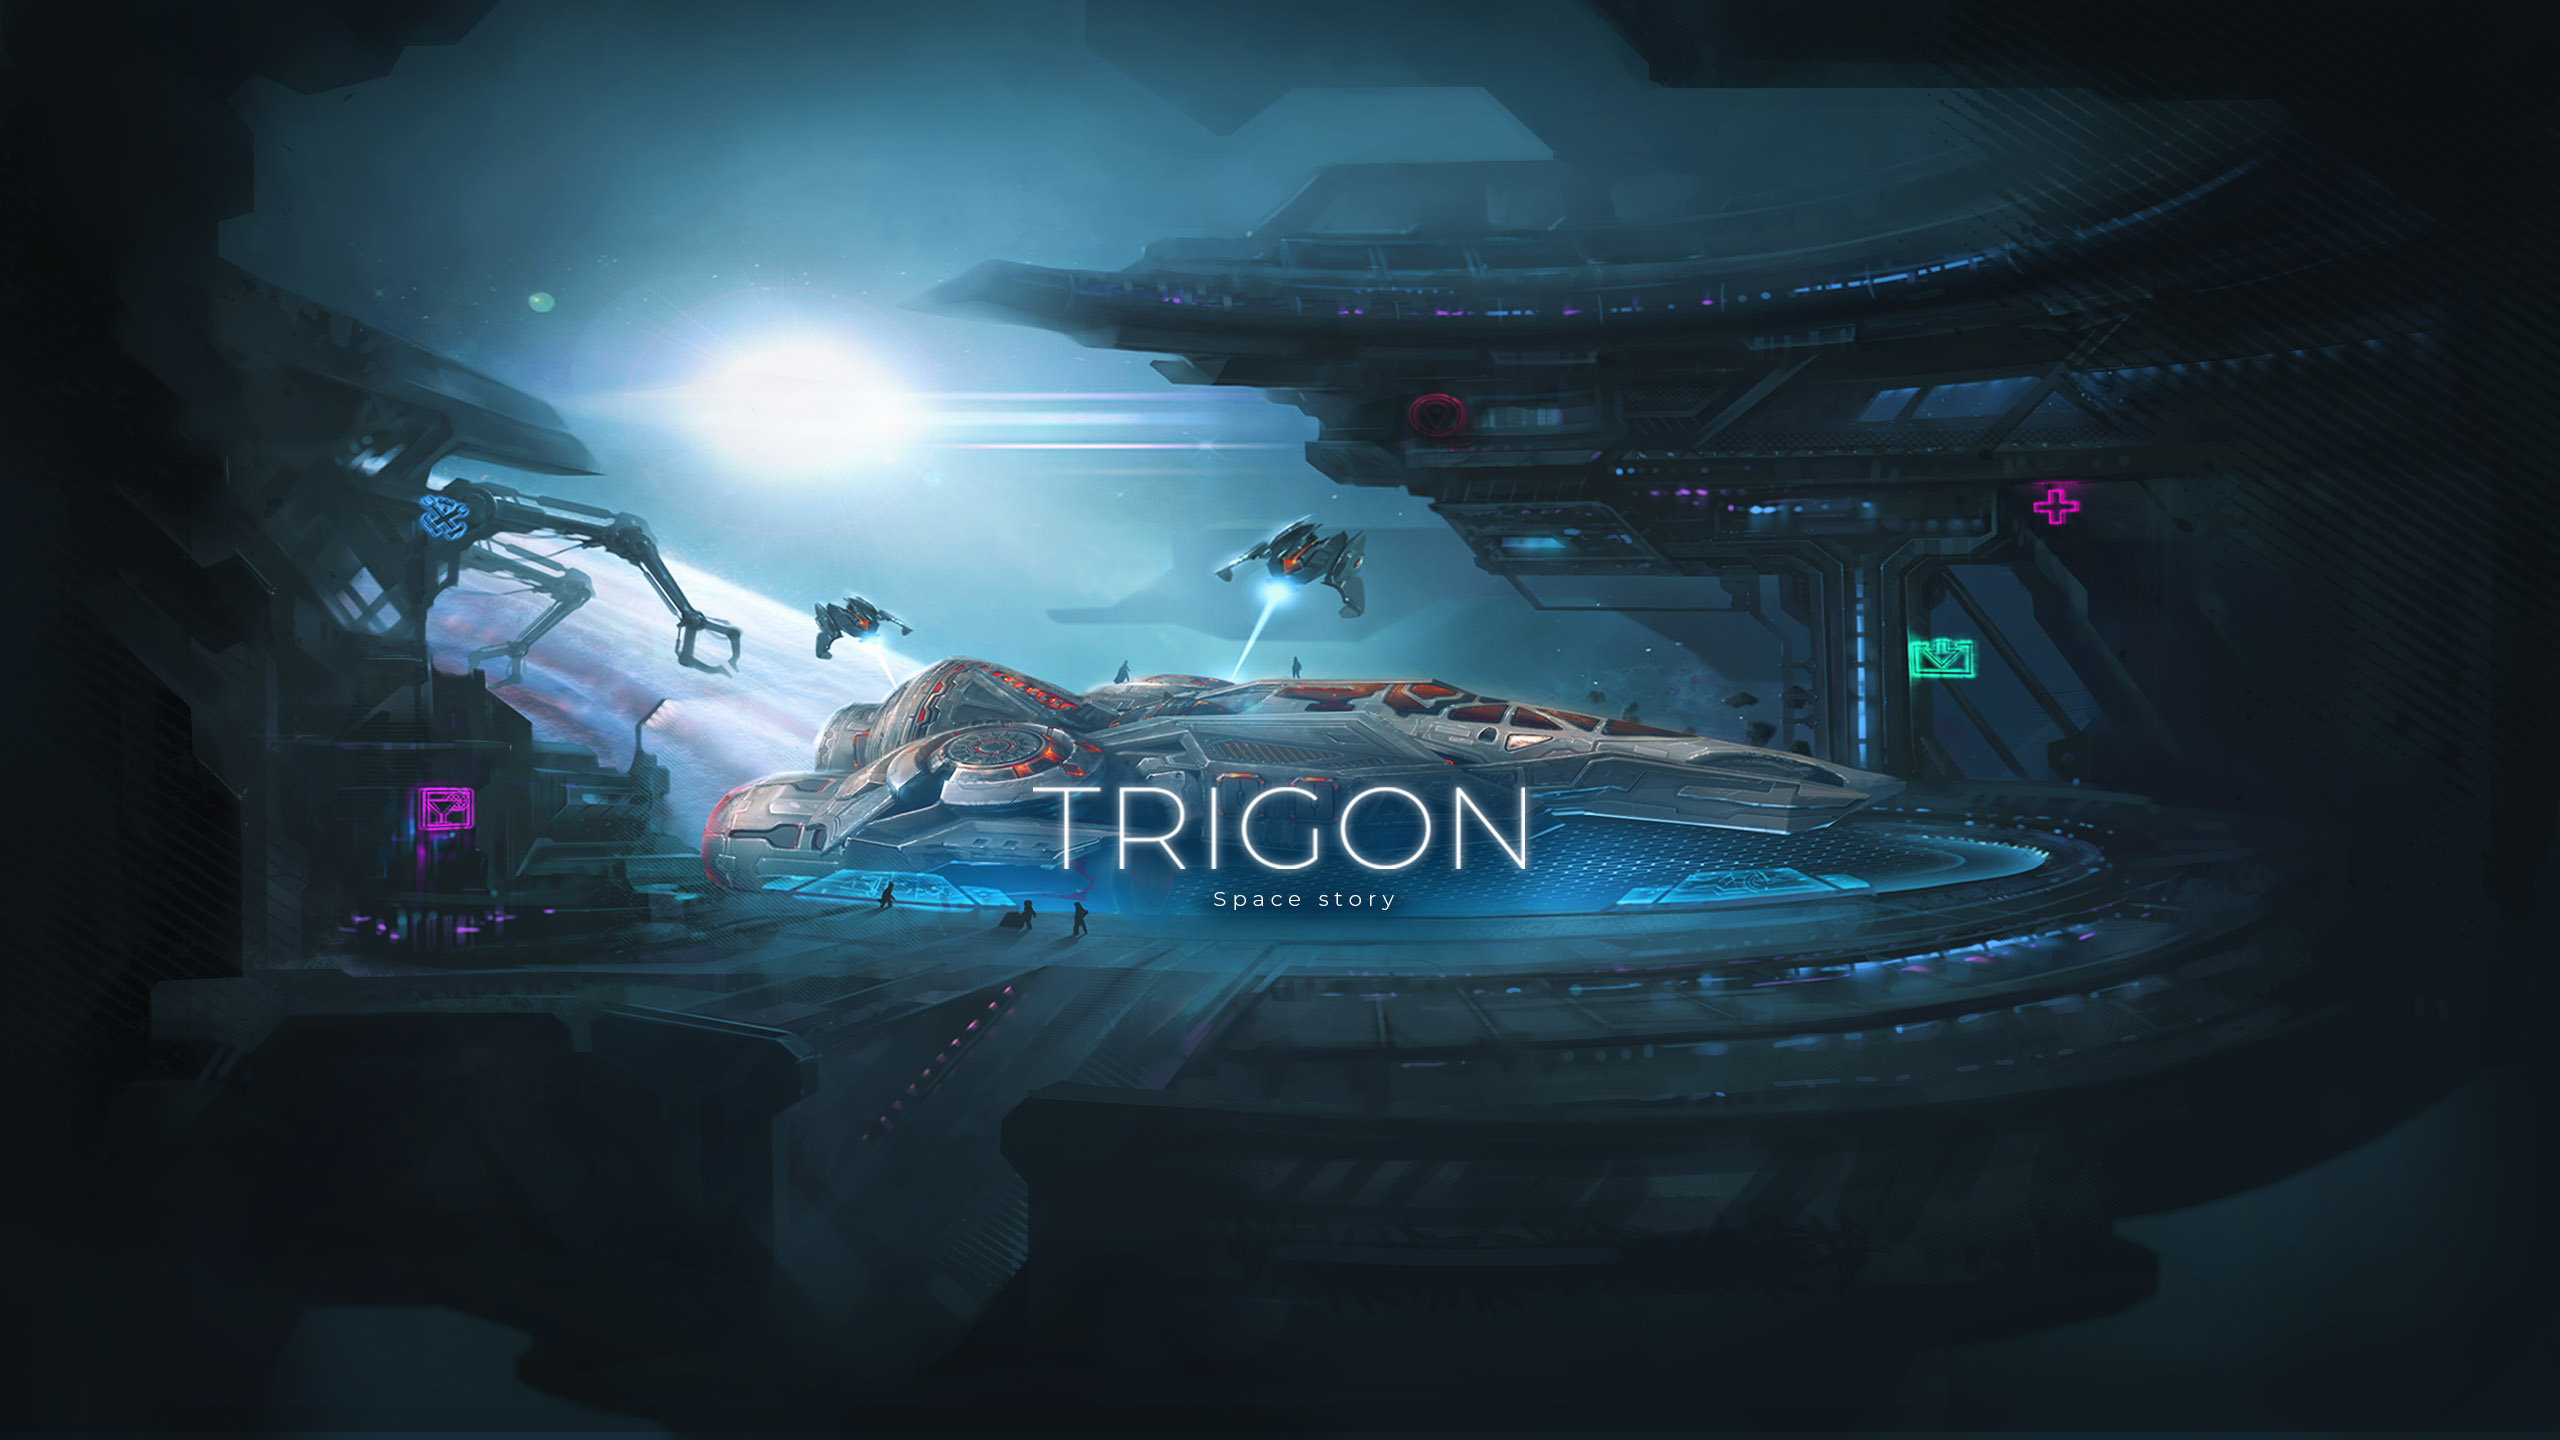 Trigon Space Story intro